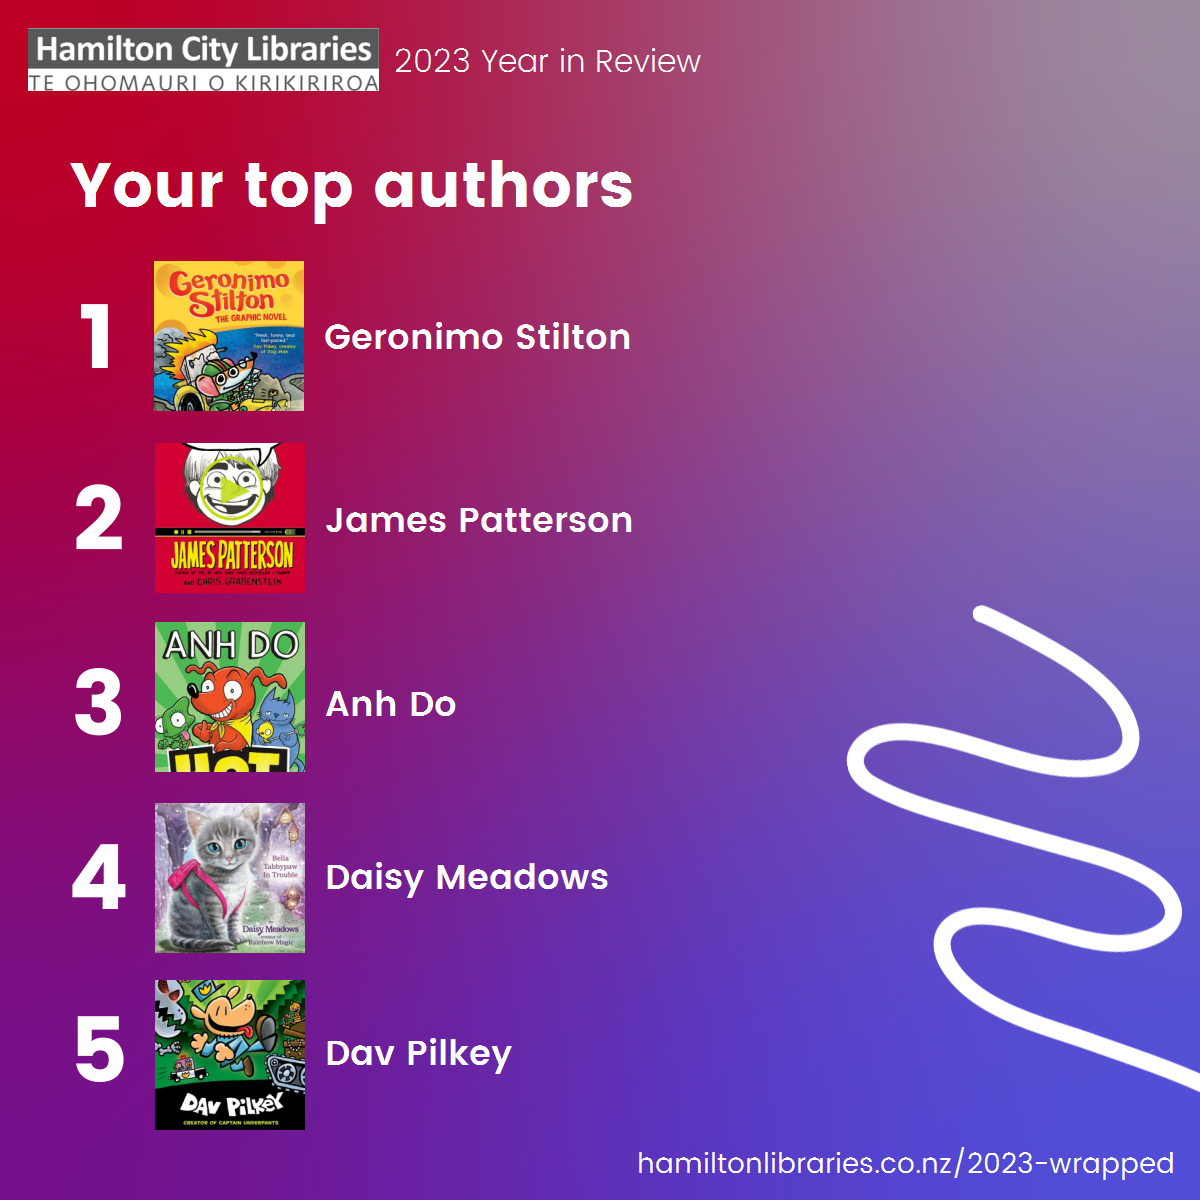 Top 5 authors: Geronimo Stilton, James Patterson, Anh Do, Daisy Meadows, Dav Pilkey